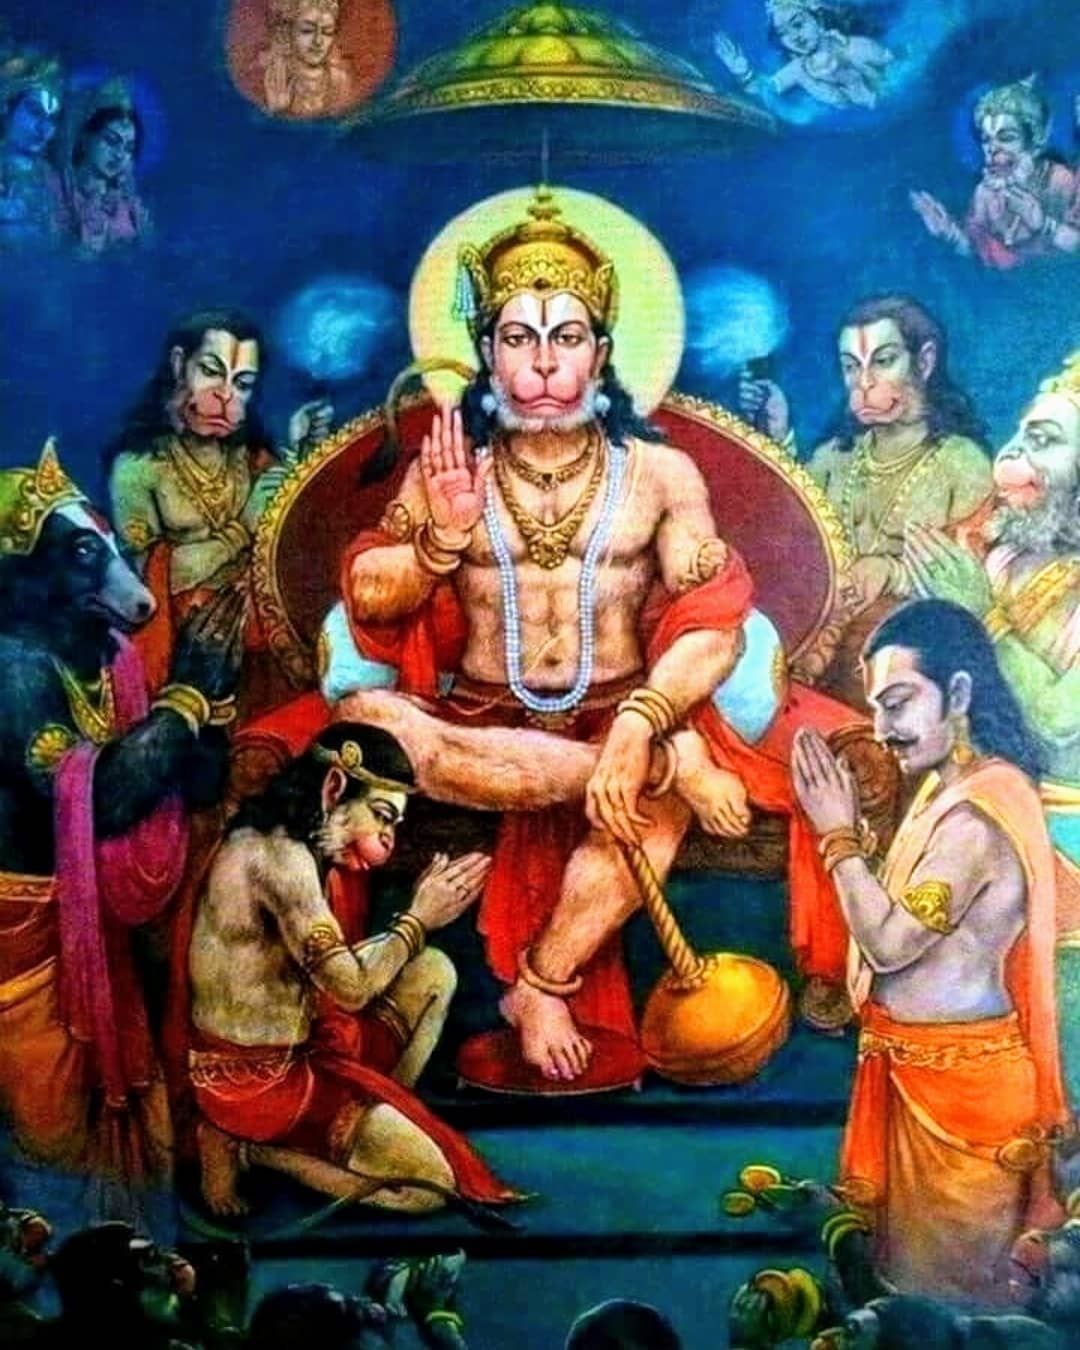 Image may contain: 9 people. Lord hanuman wallpaper, Hanumanji